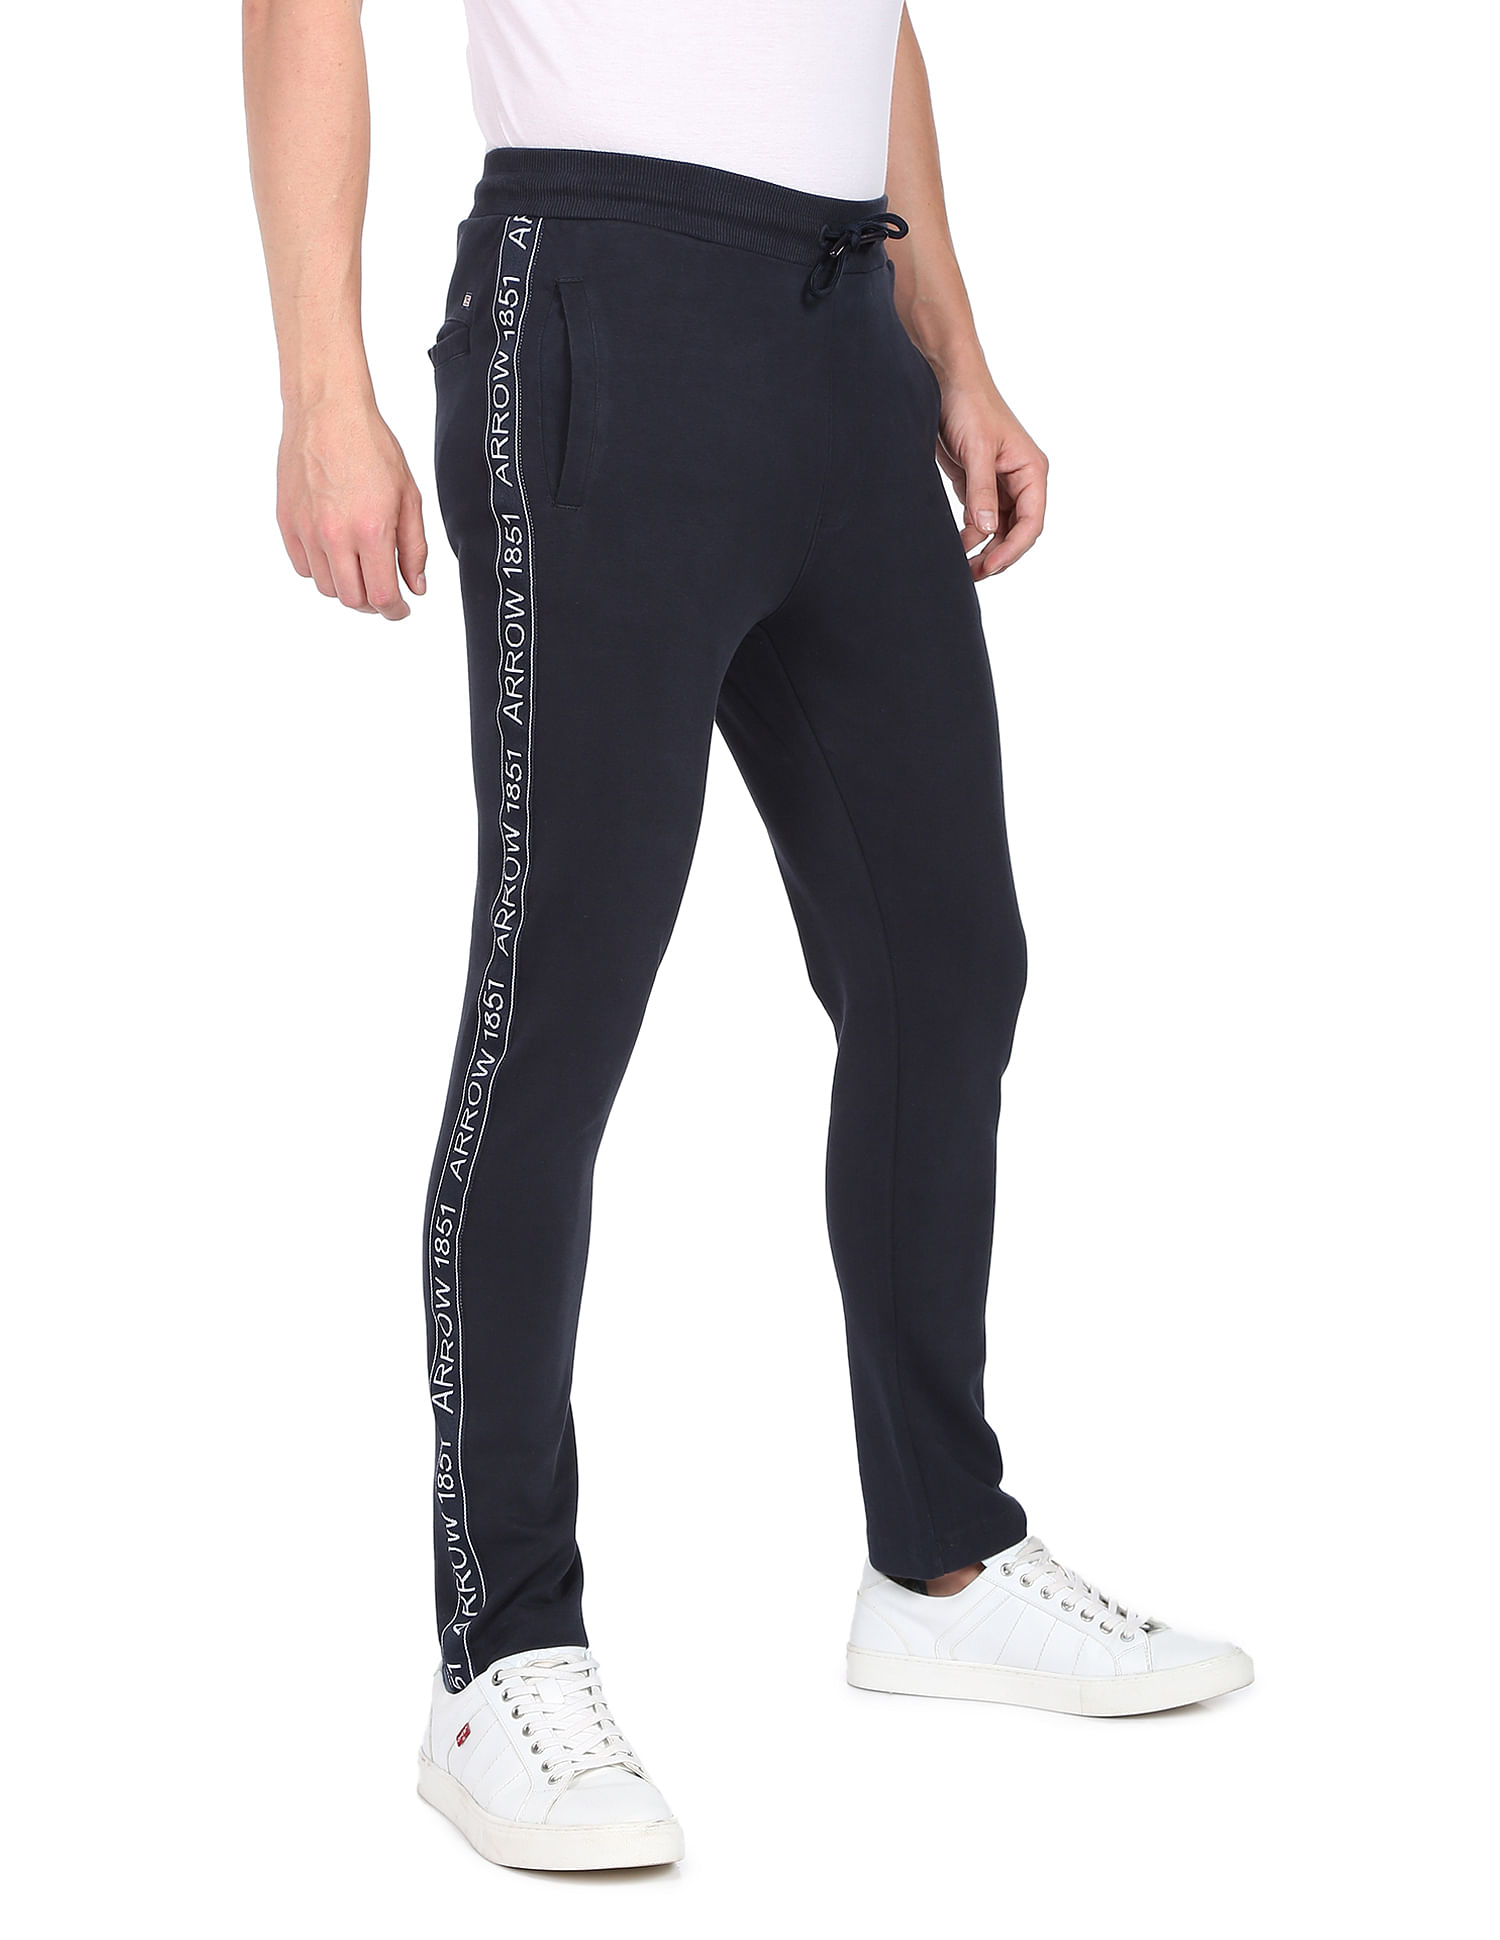 Buy Black Track Pants for Men by Arrow Sports Online  Ajiocom